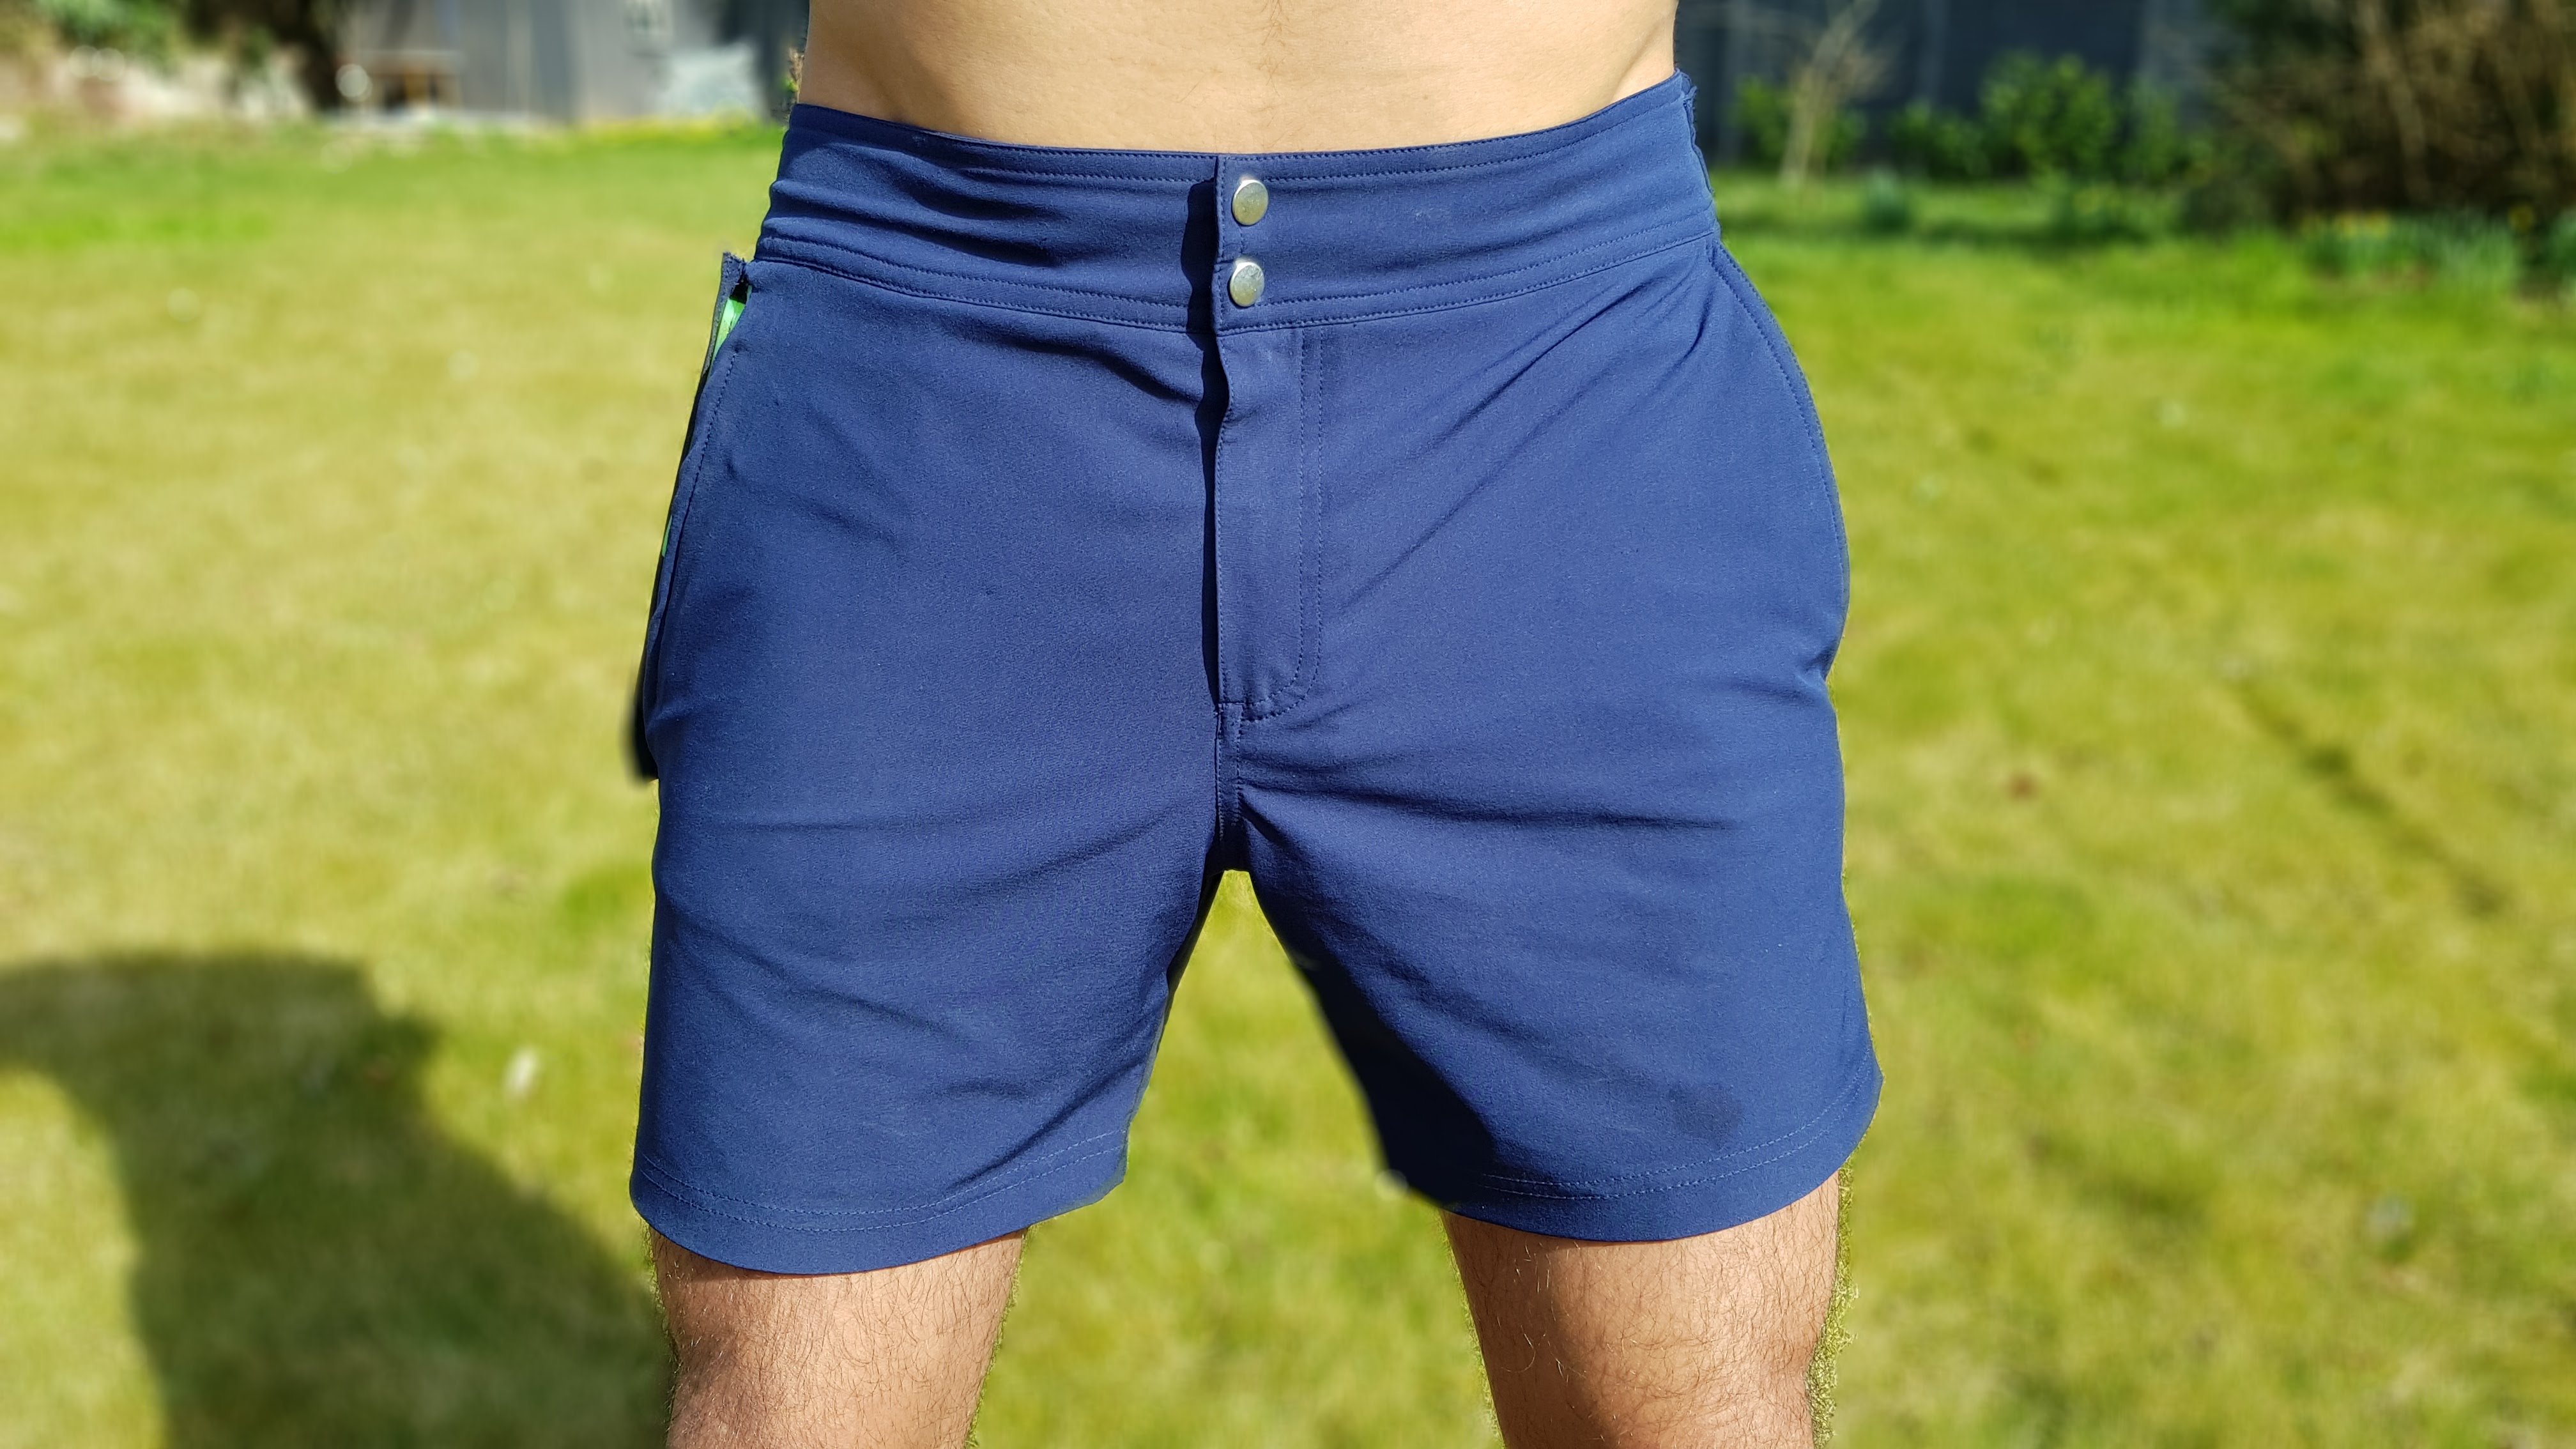 Aquanautia Shorts with a waterproof pocket which seals with magnets (Aquanautia Shorts)